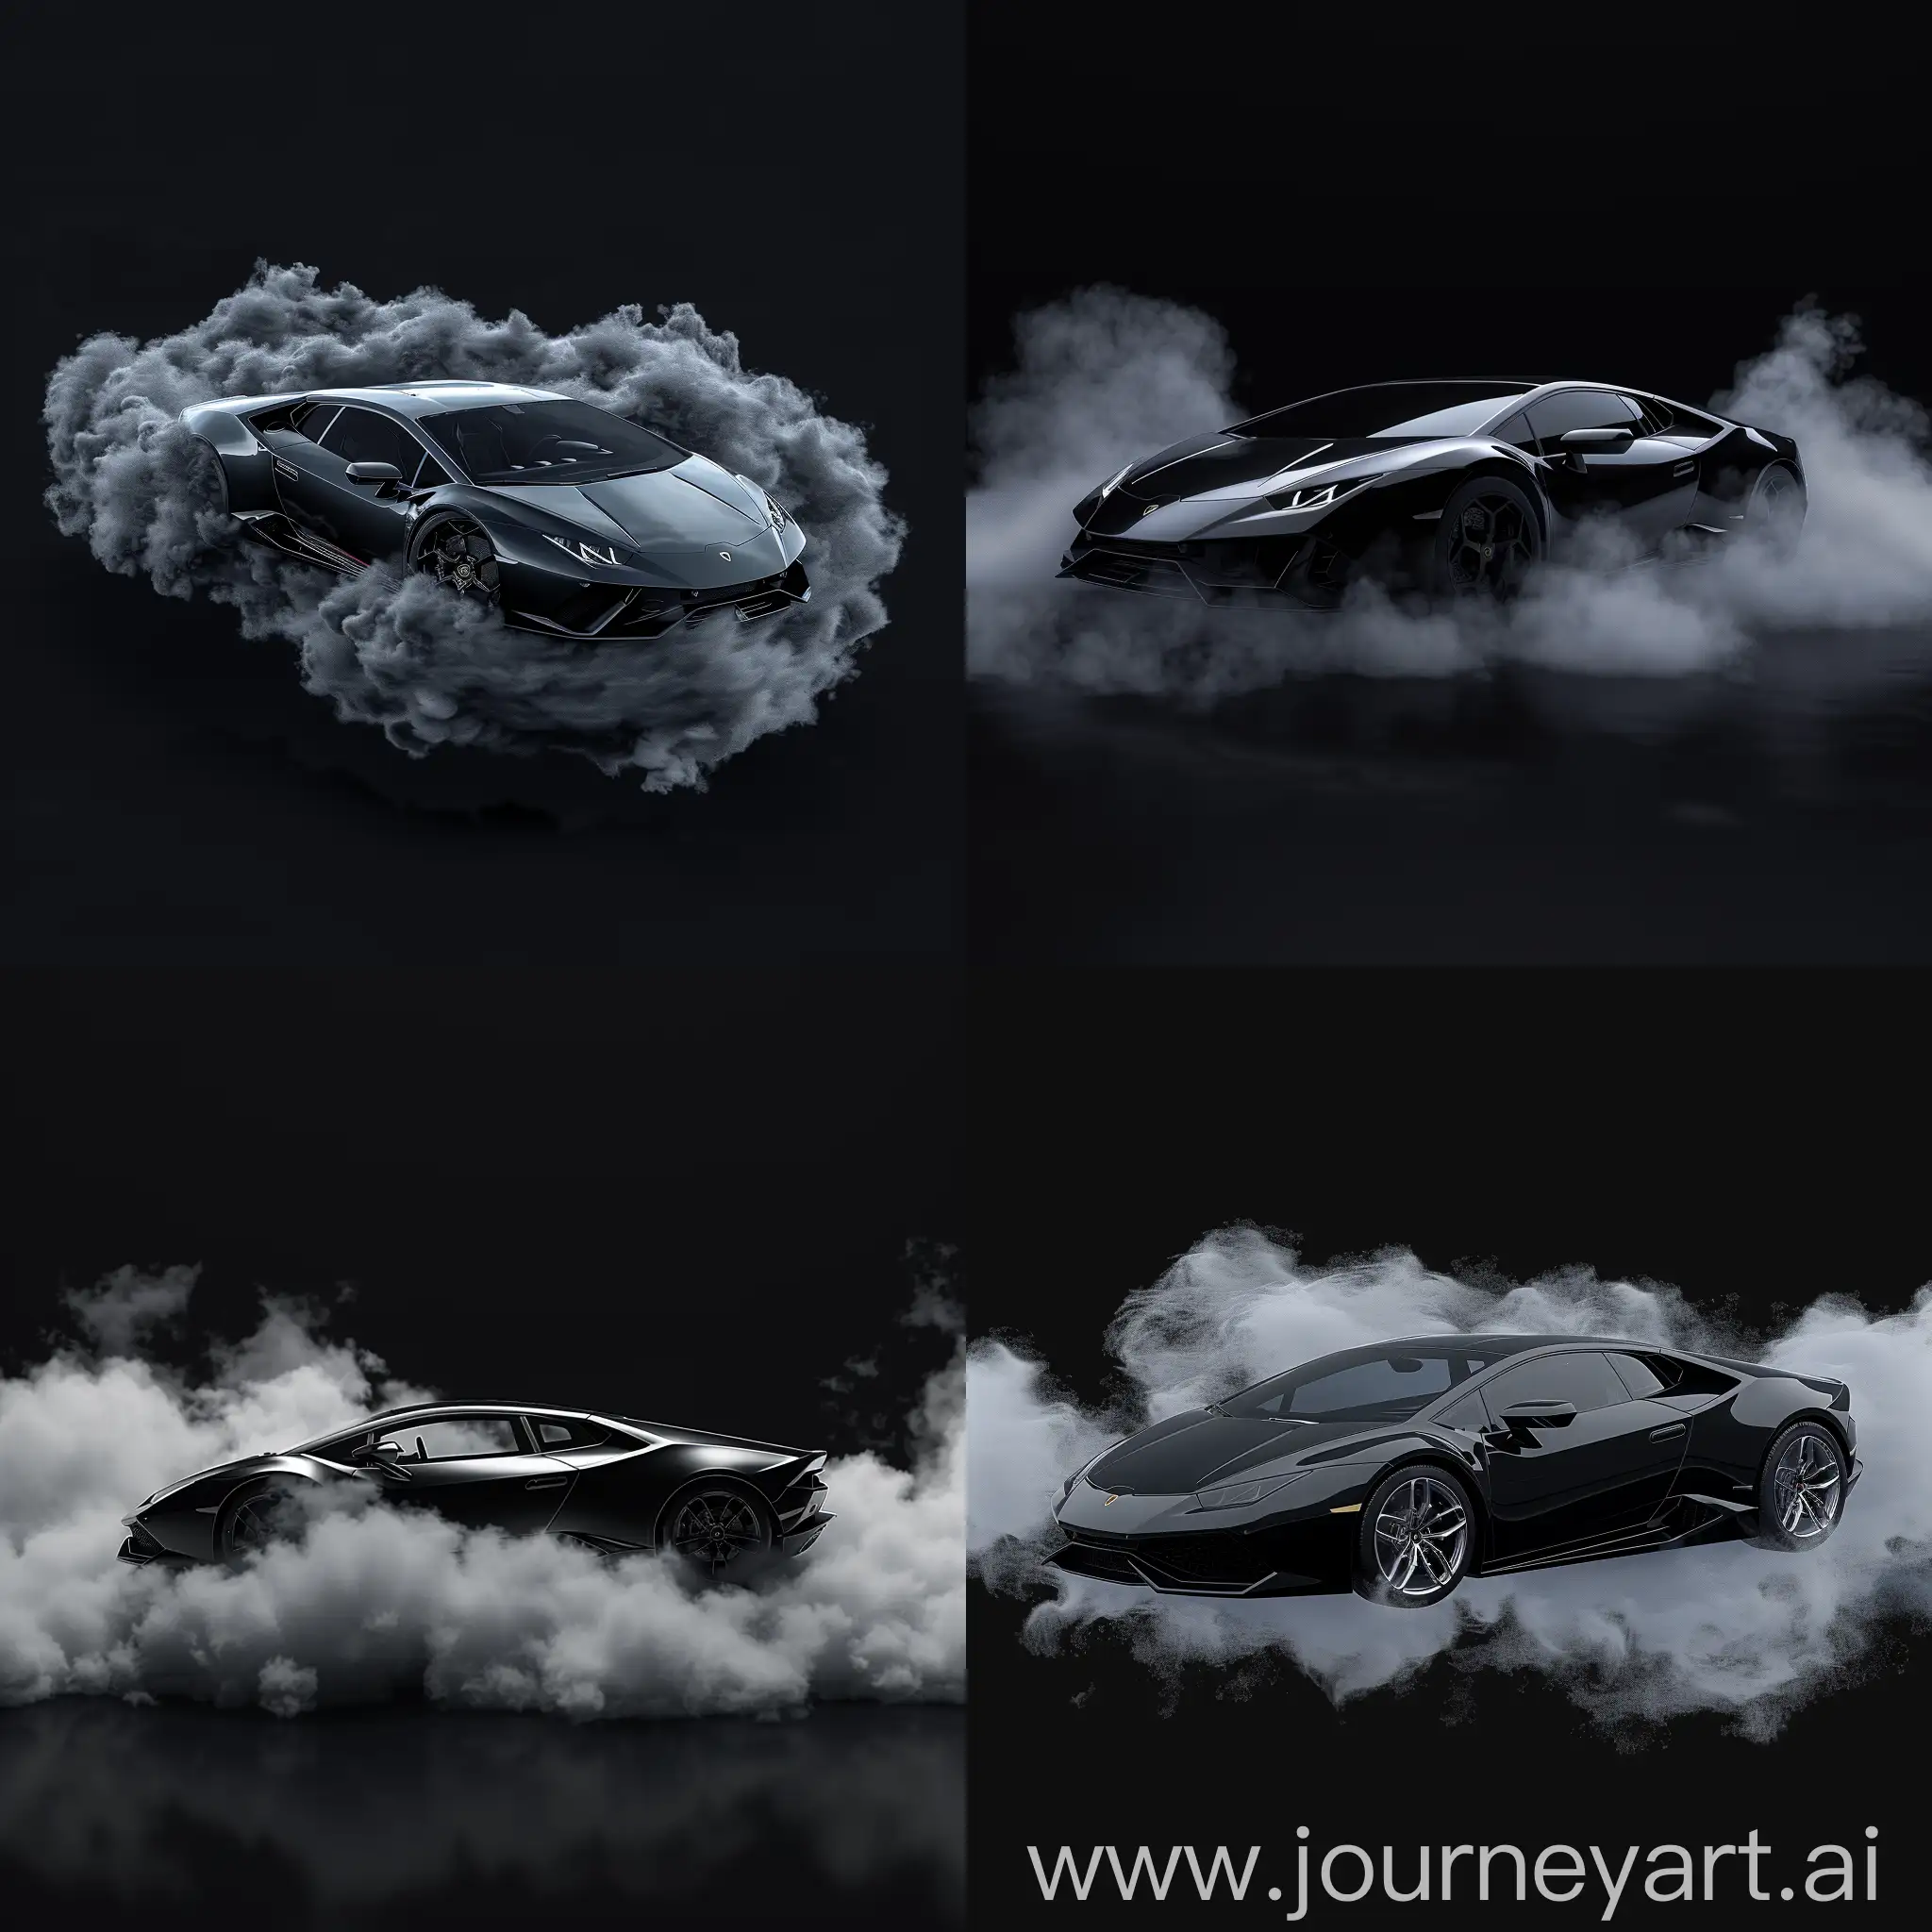 Sleek-Black-Lamborghini-Hovering-in-Ethereal-Clouds